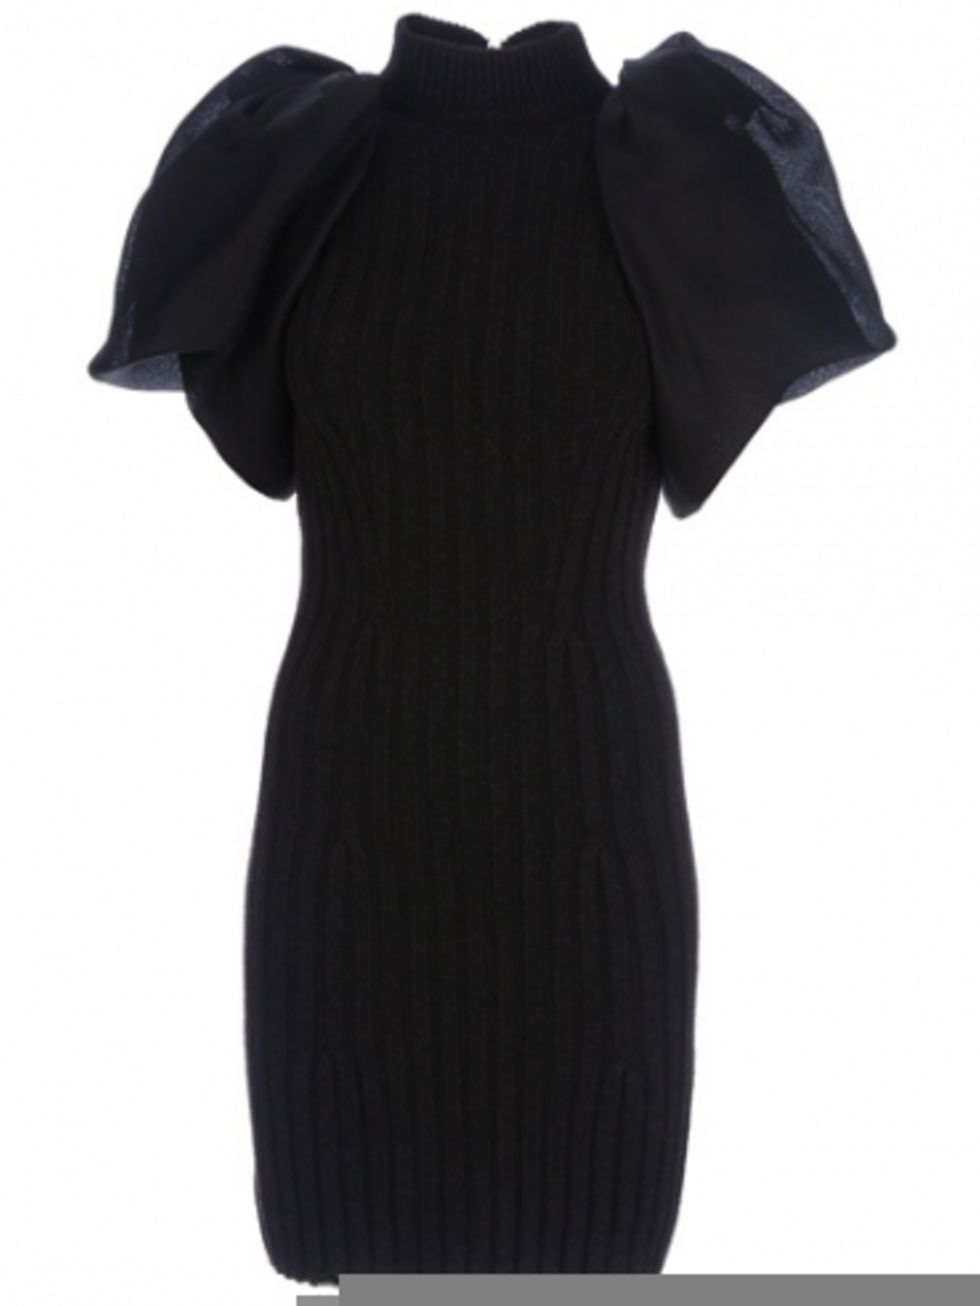 Sleeve, Dress, Neck, Black, One-piece garment, Wool, Woolen, Day dress, Sweater, Pattern, 